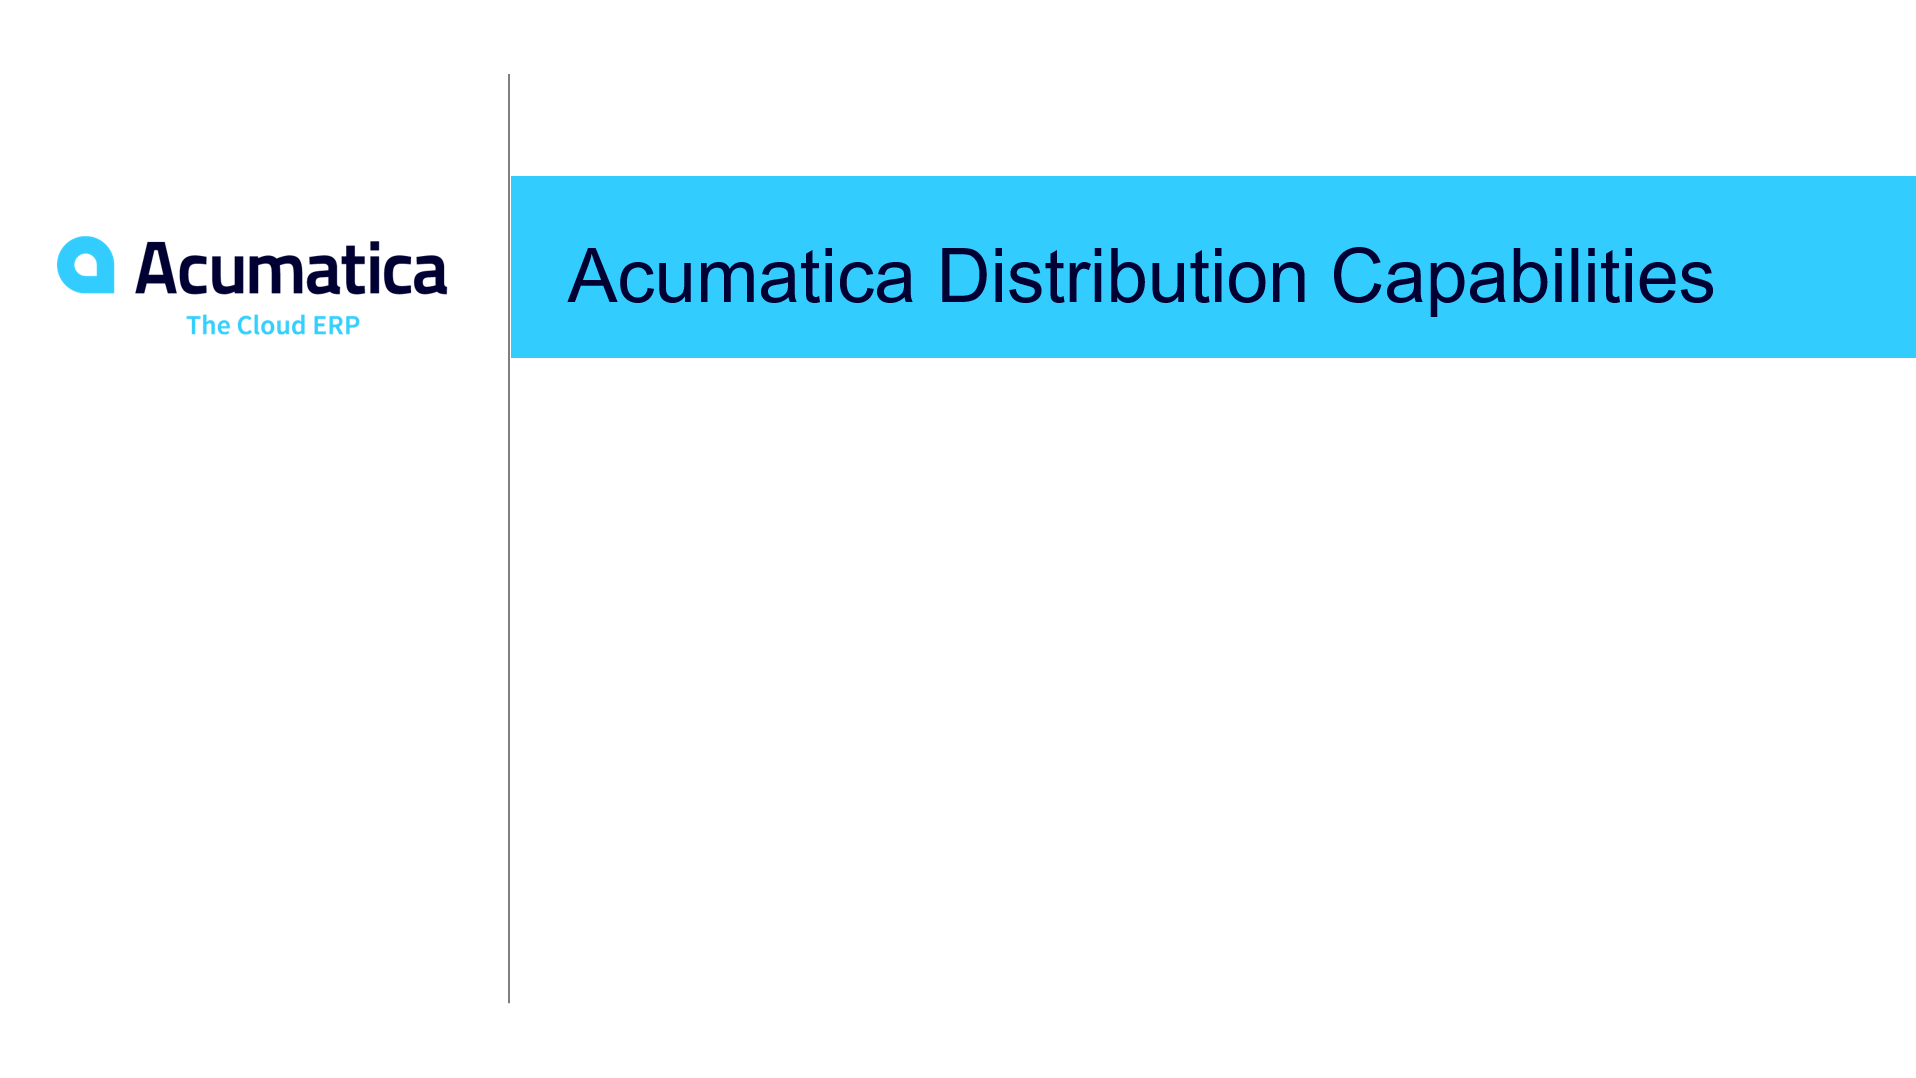 Acumatica Distribution Capabilities